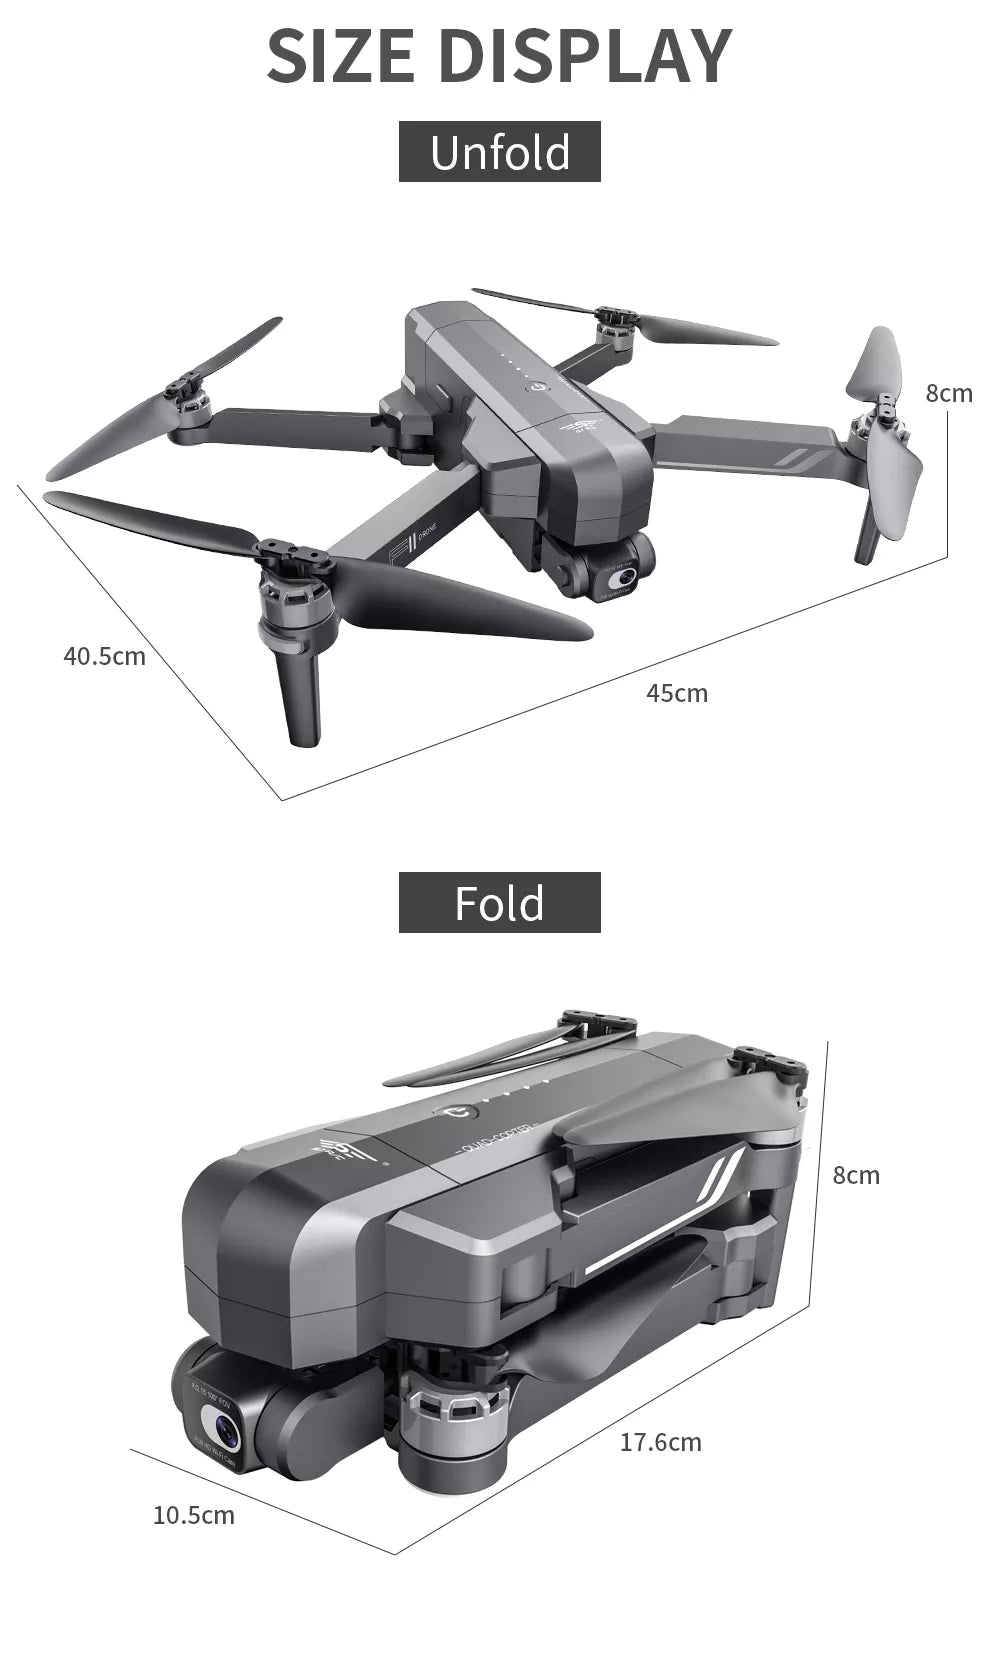 SJRC F11S 4K HD PRO Drone, SIZE DISPLAY Unfold 8cm 40.Scm 45cm